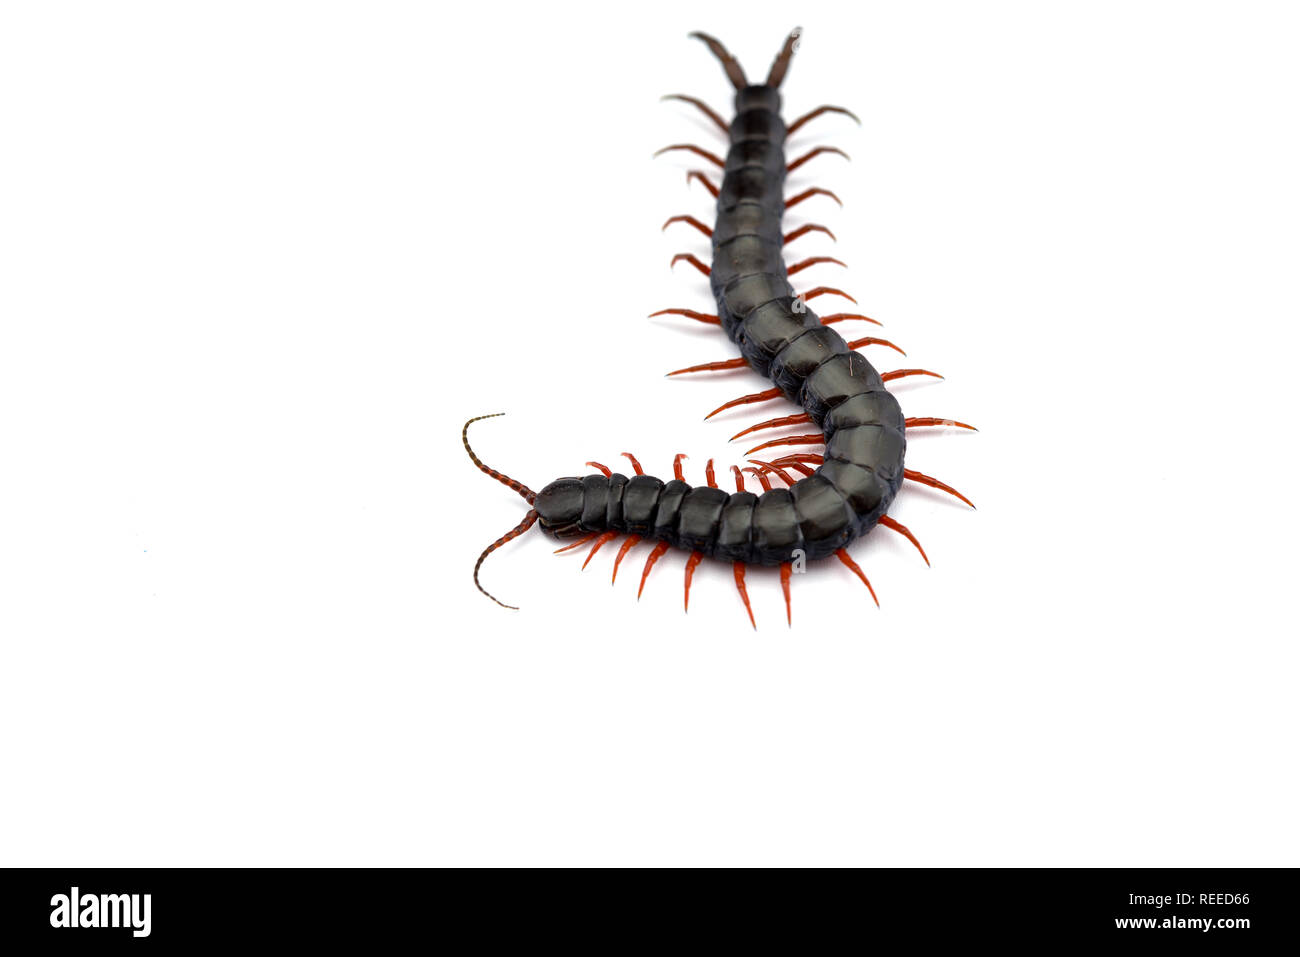 Giant centipede isolated on white background Stock Photo